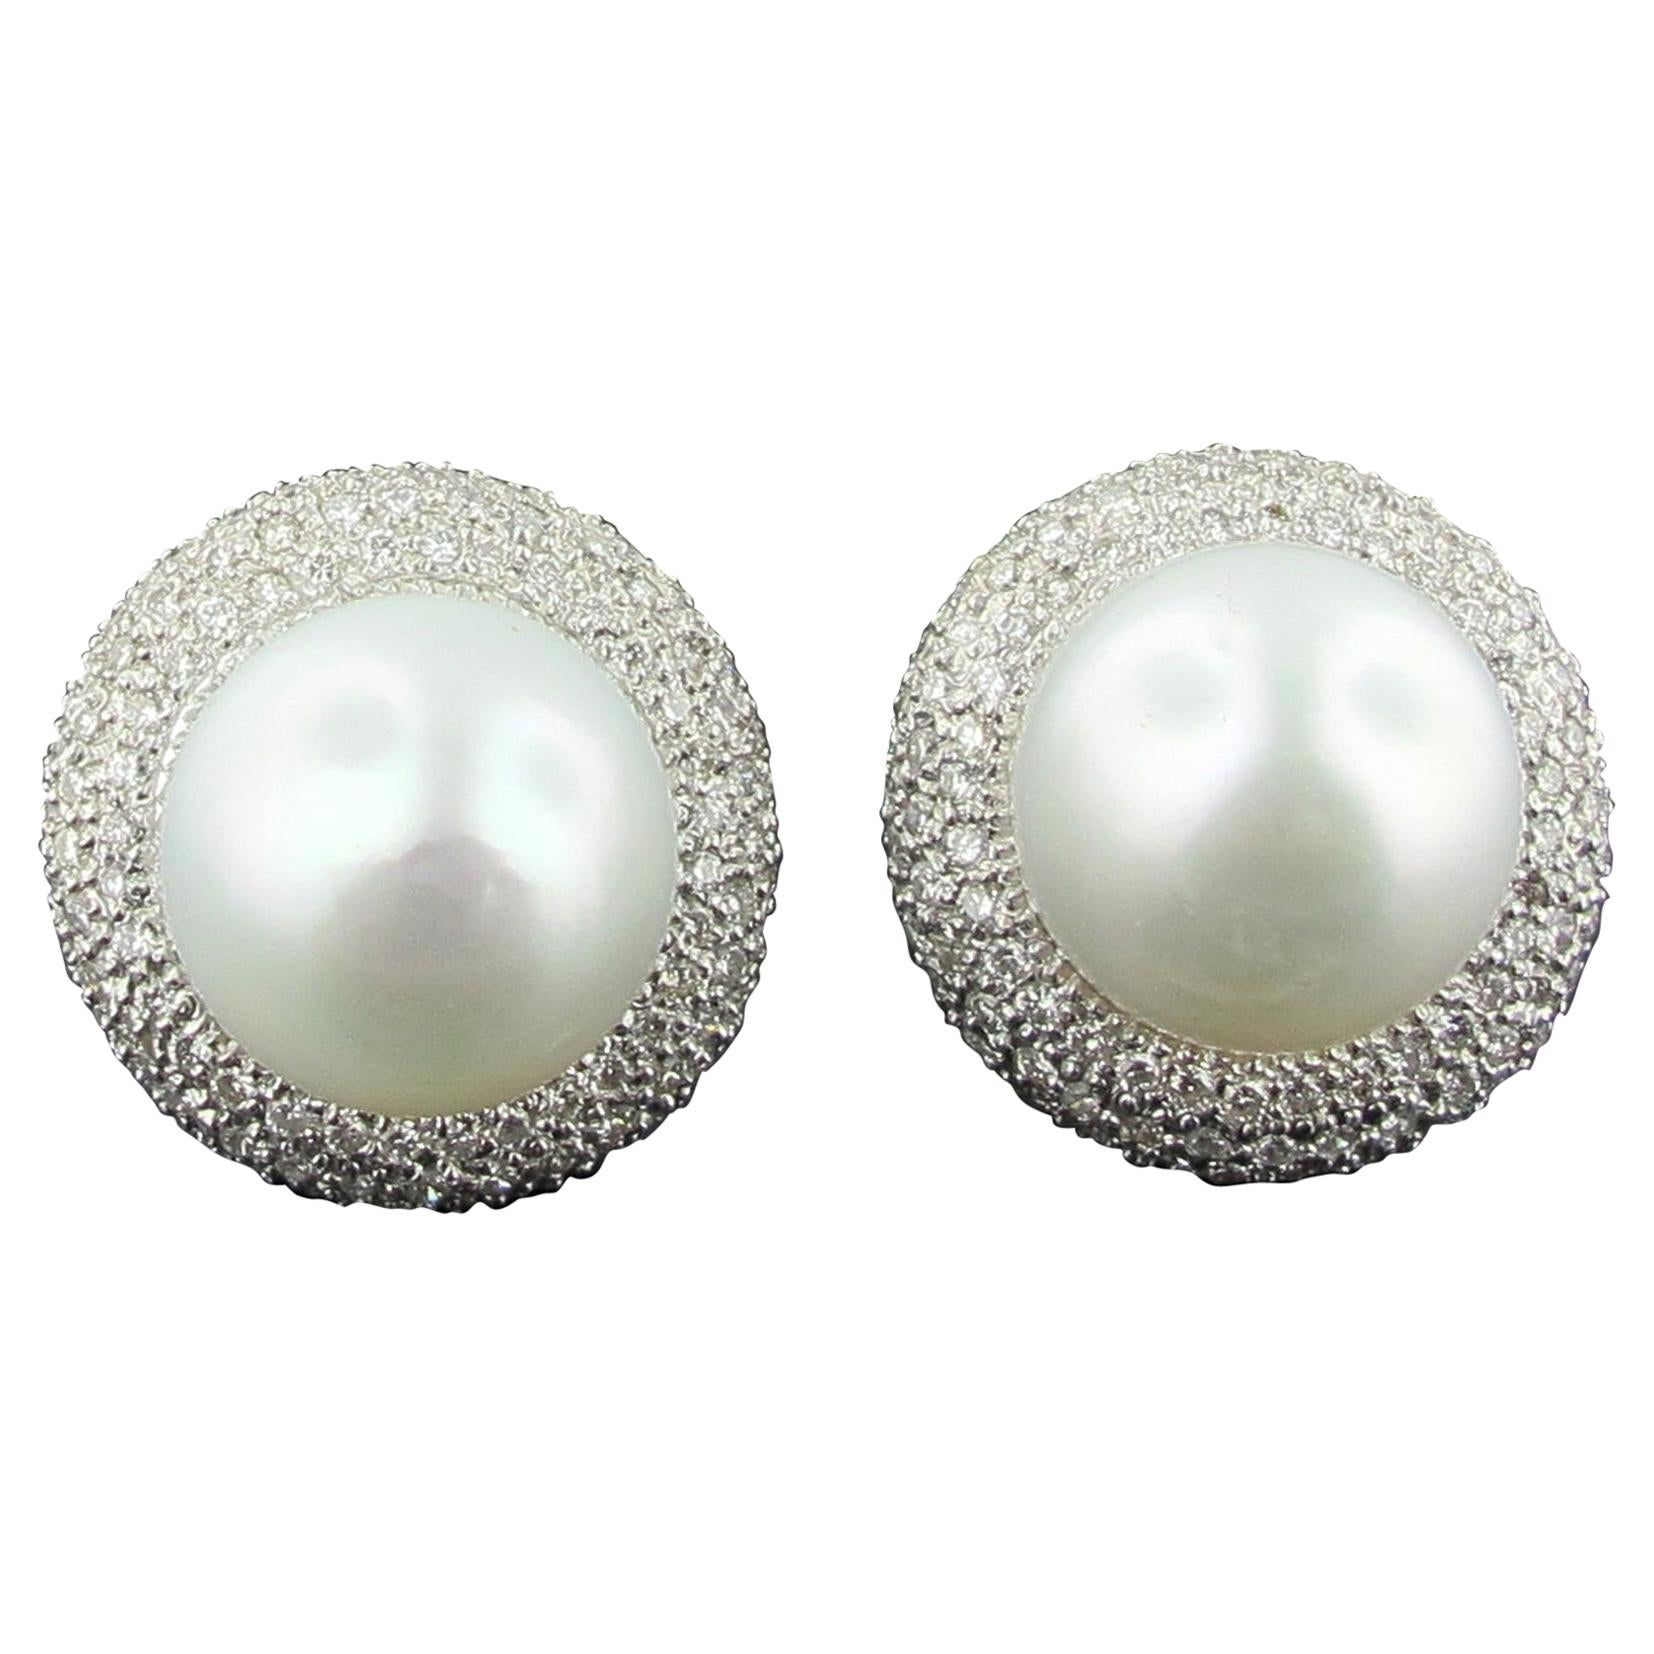 South Sea White Pearl and Diamond Earrings in 14 Karat White Gold